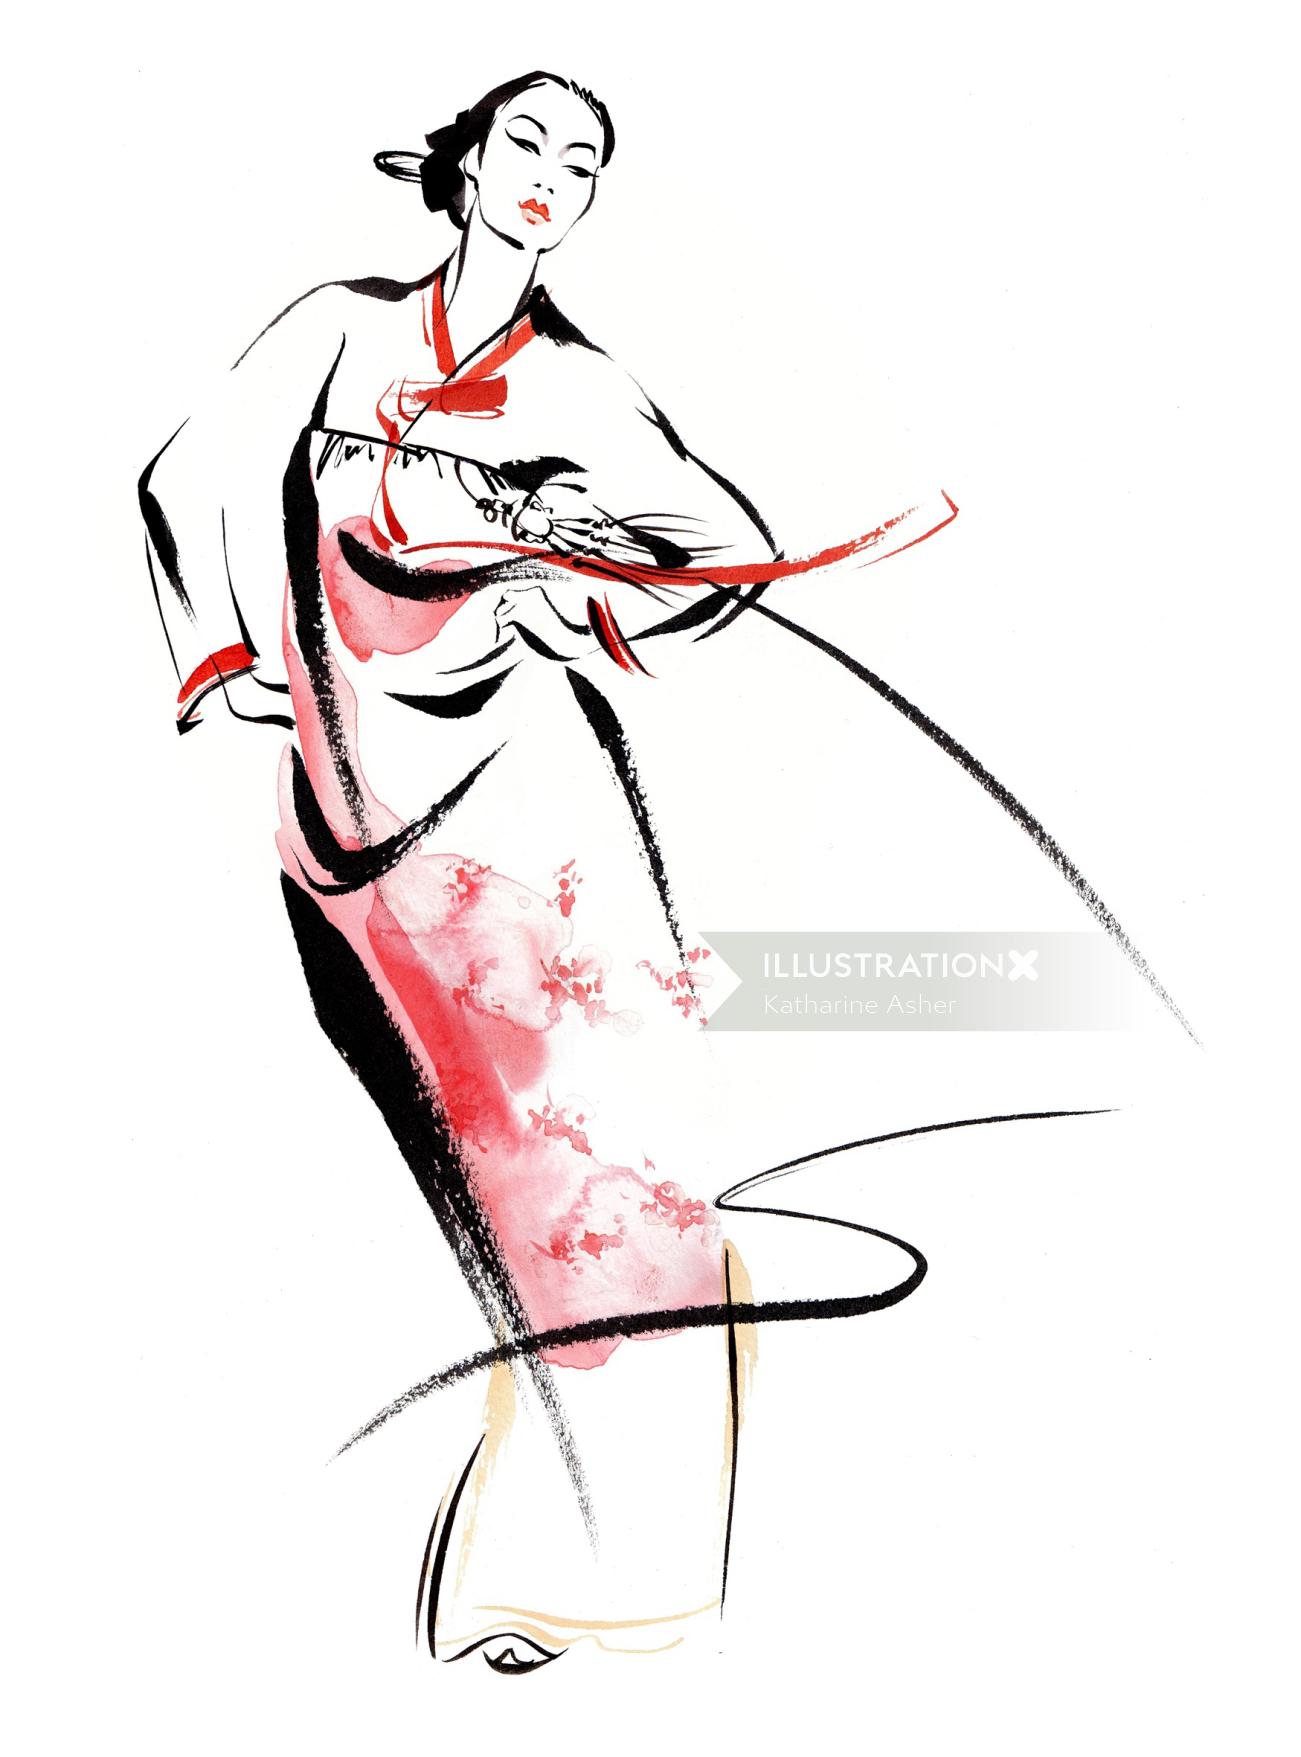 Korean traditional dress illustration by Katharine Asher